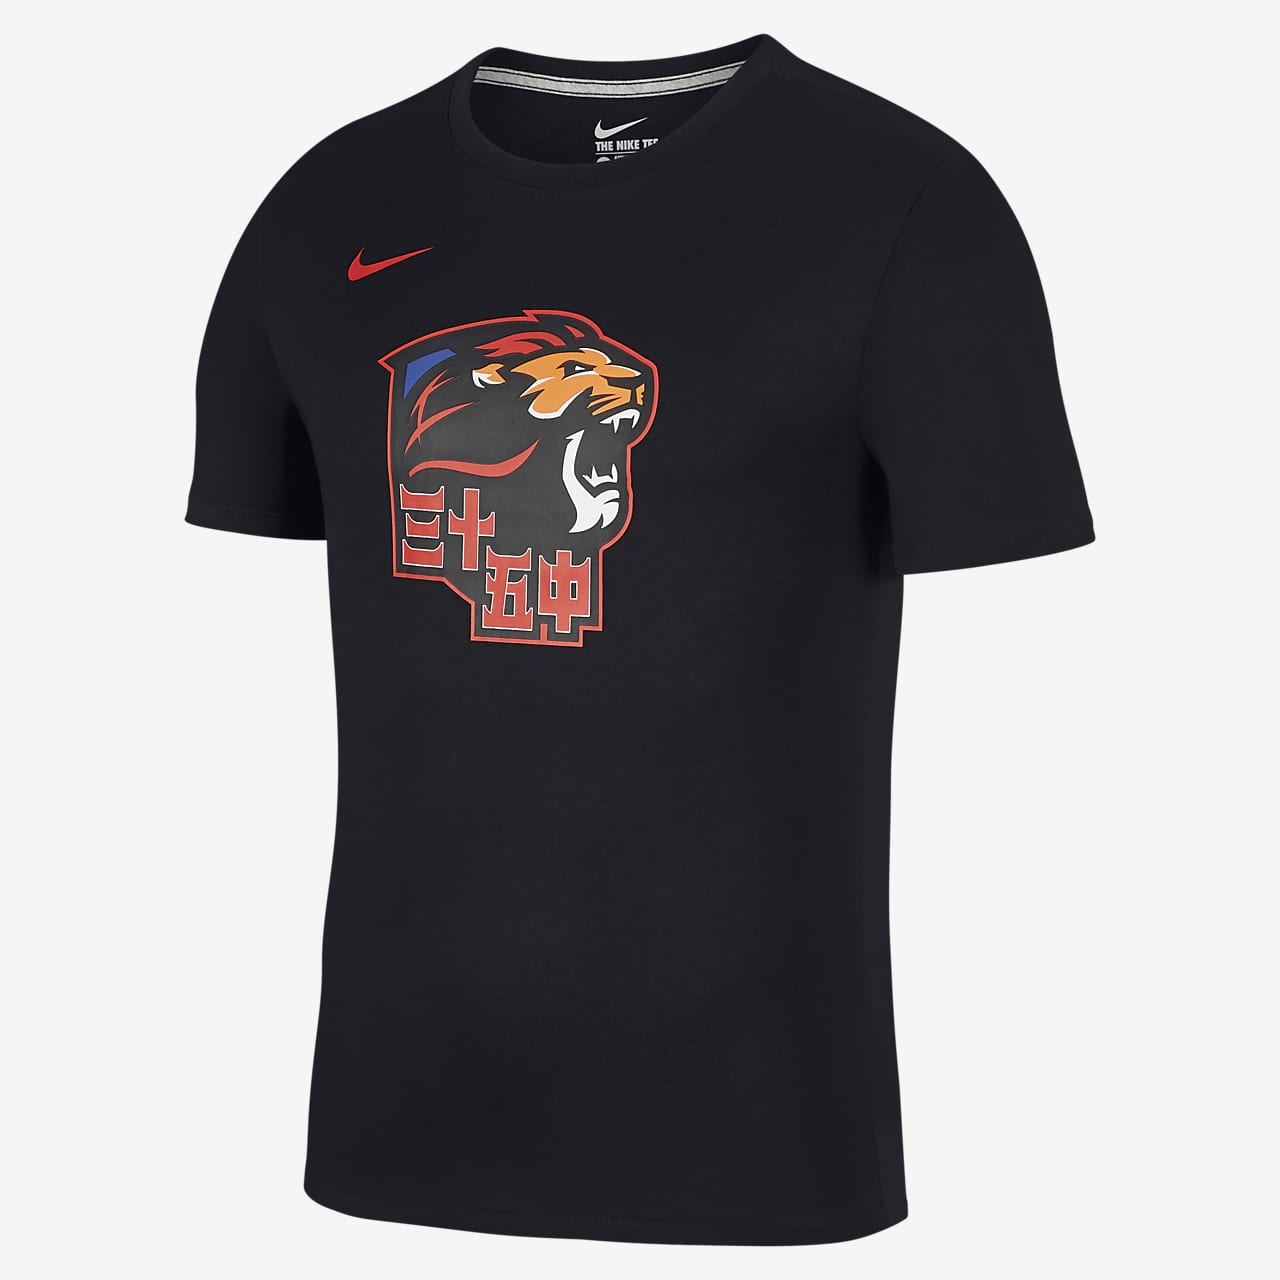 Nike 2019 HBL Beijing三十五中 耐克高中篮球联赛男子篮球T恤